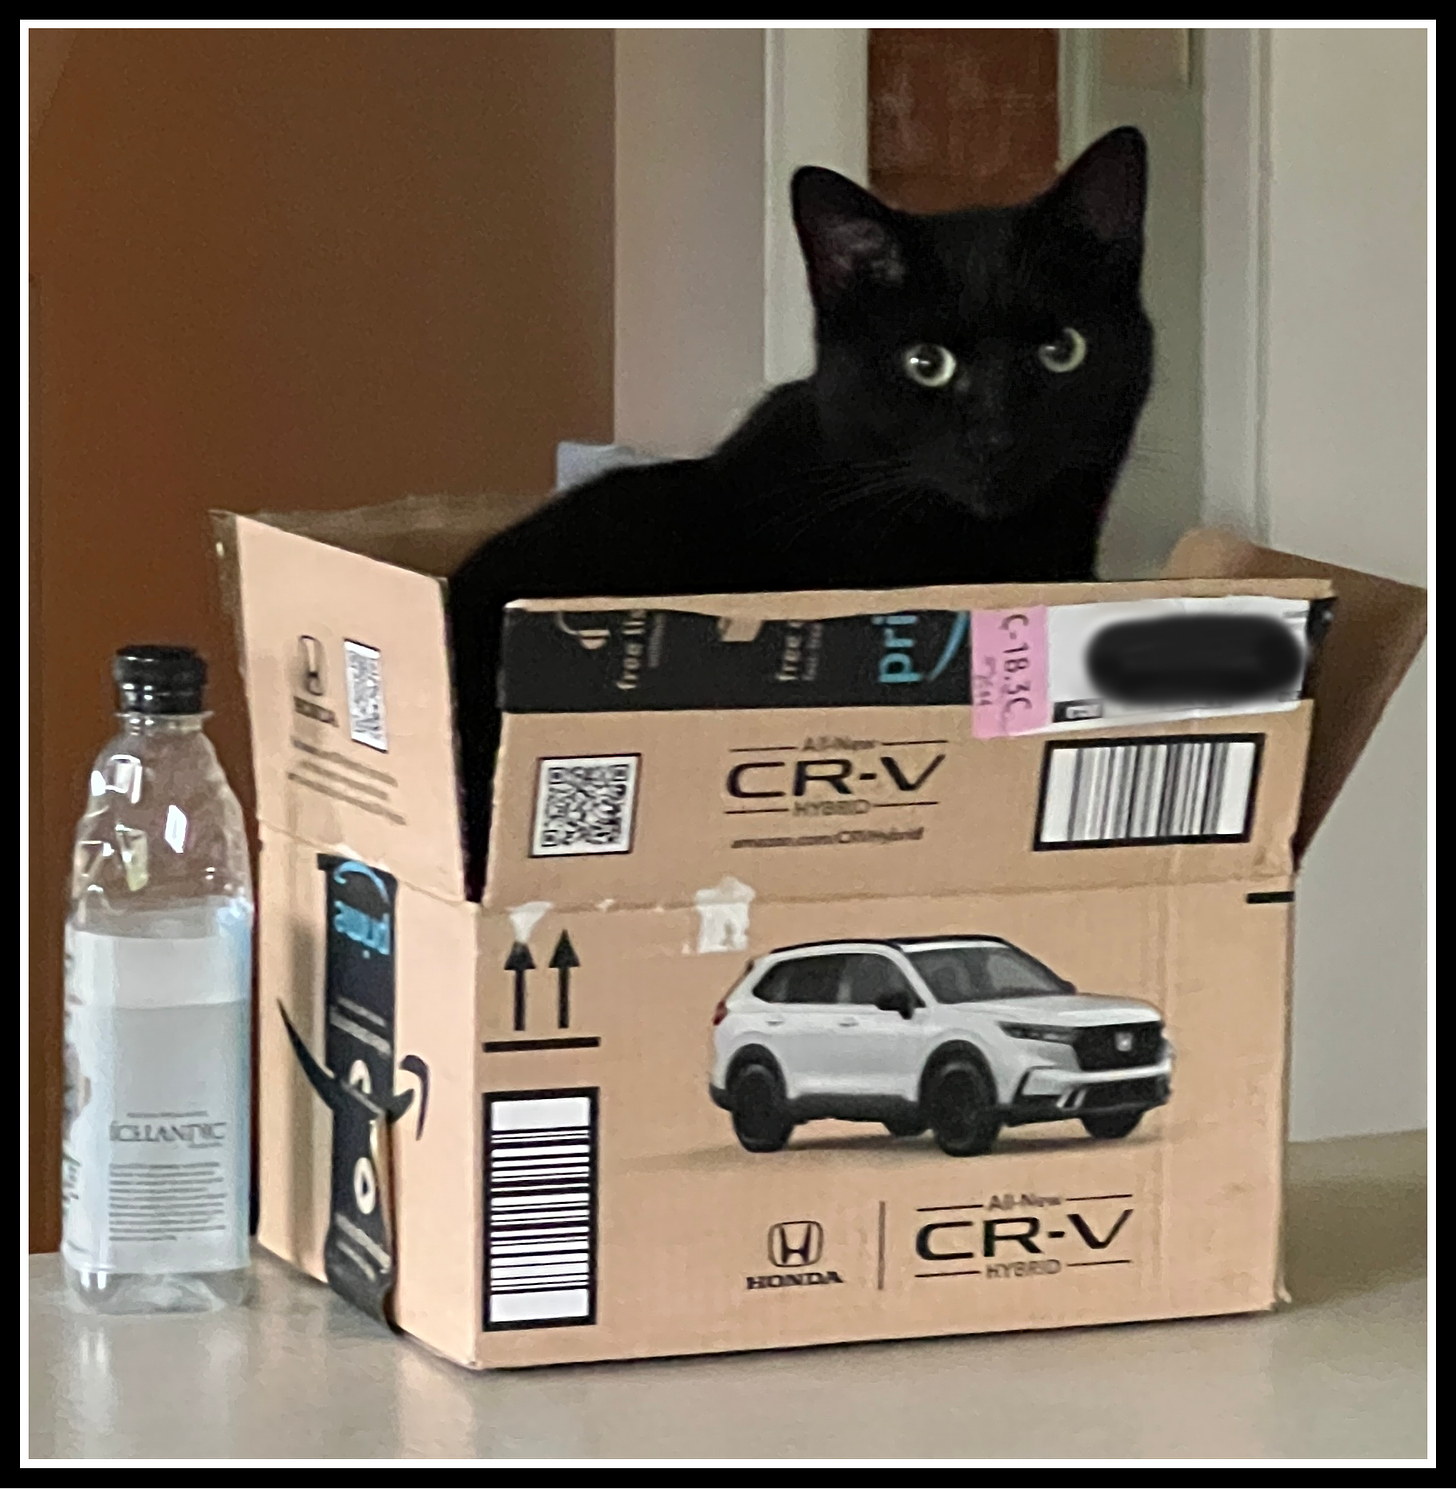 Black cat in Amazon box.